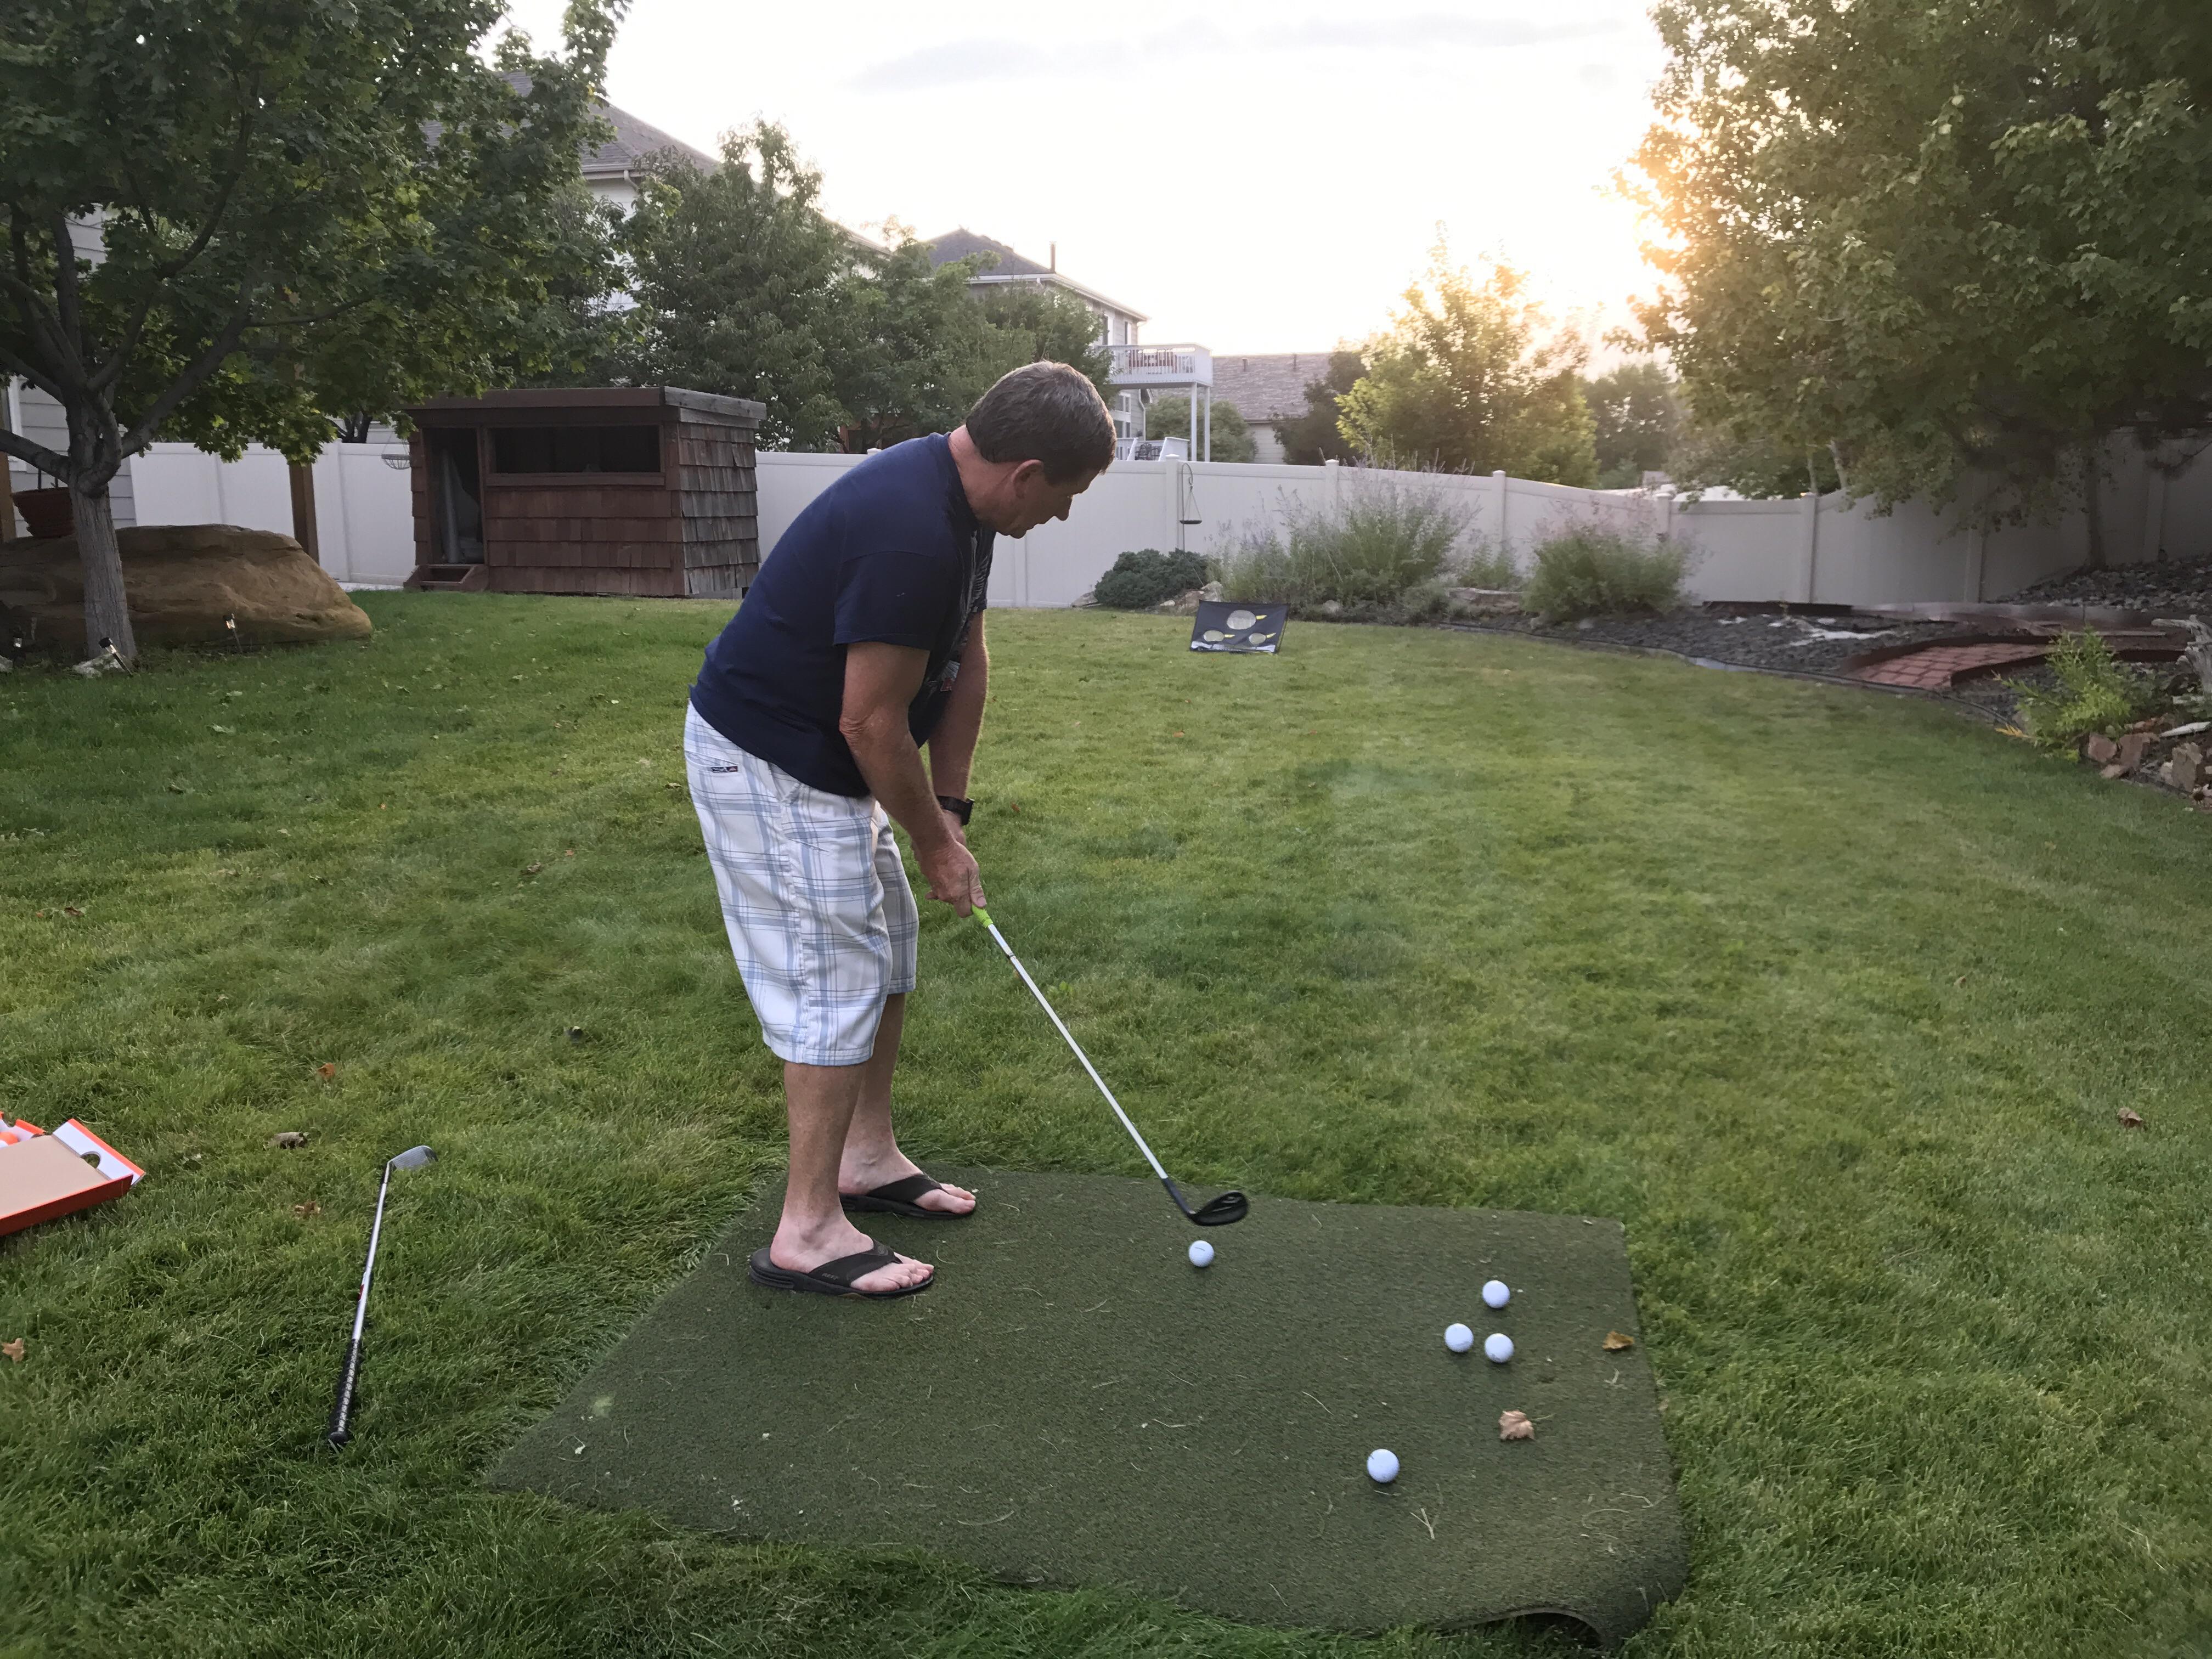 Backyard practice session! : golf